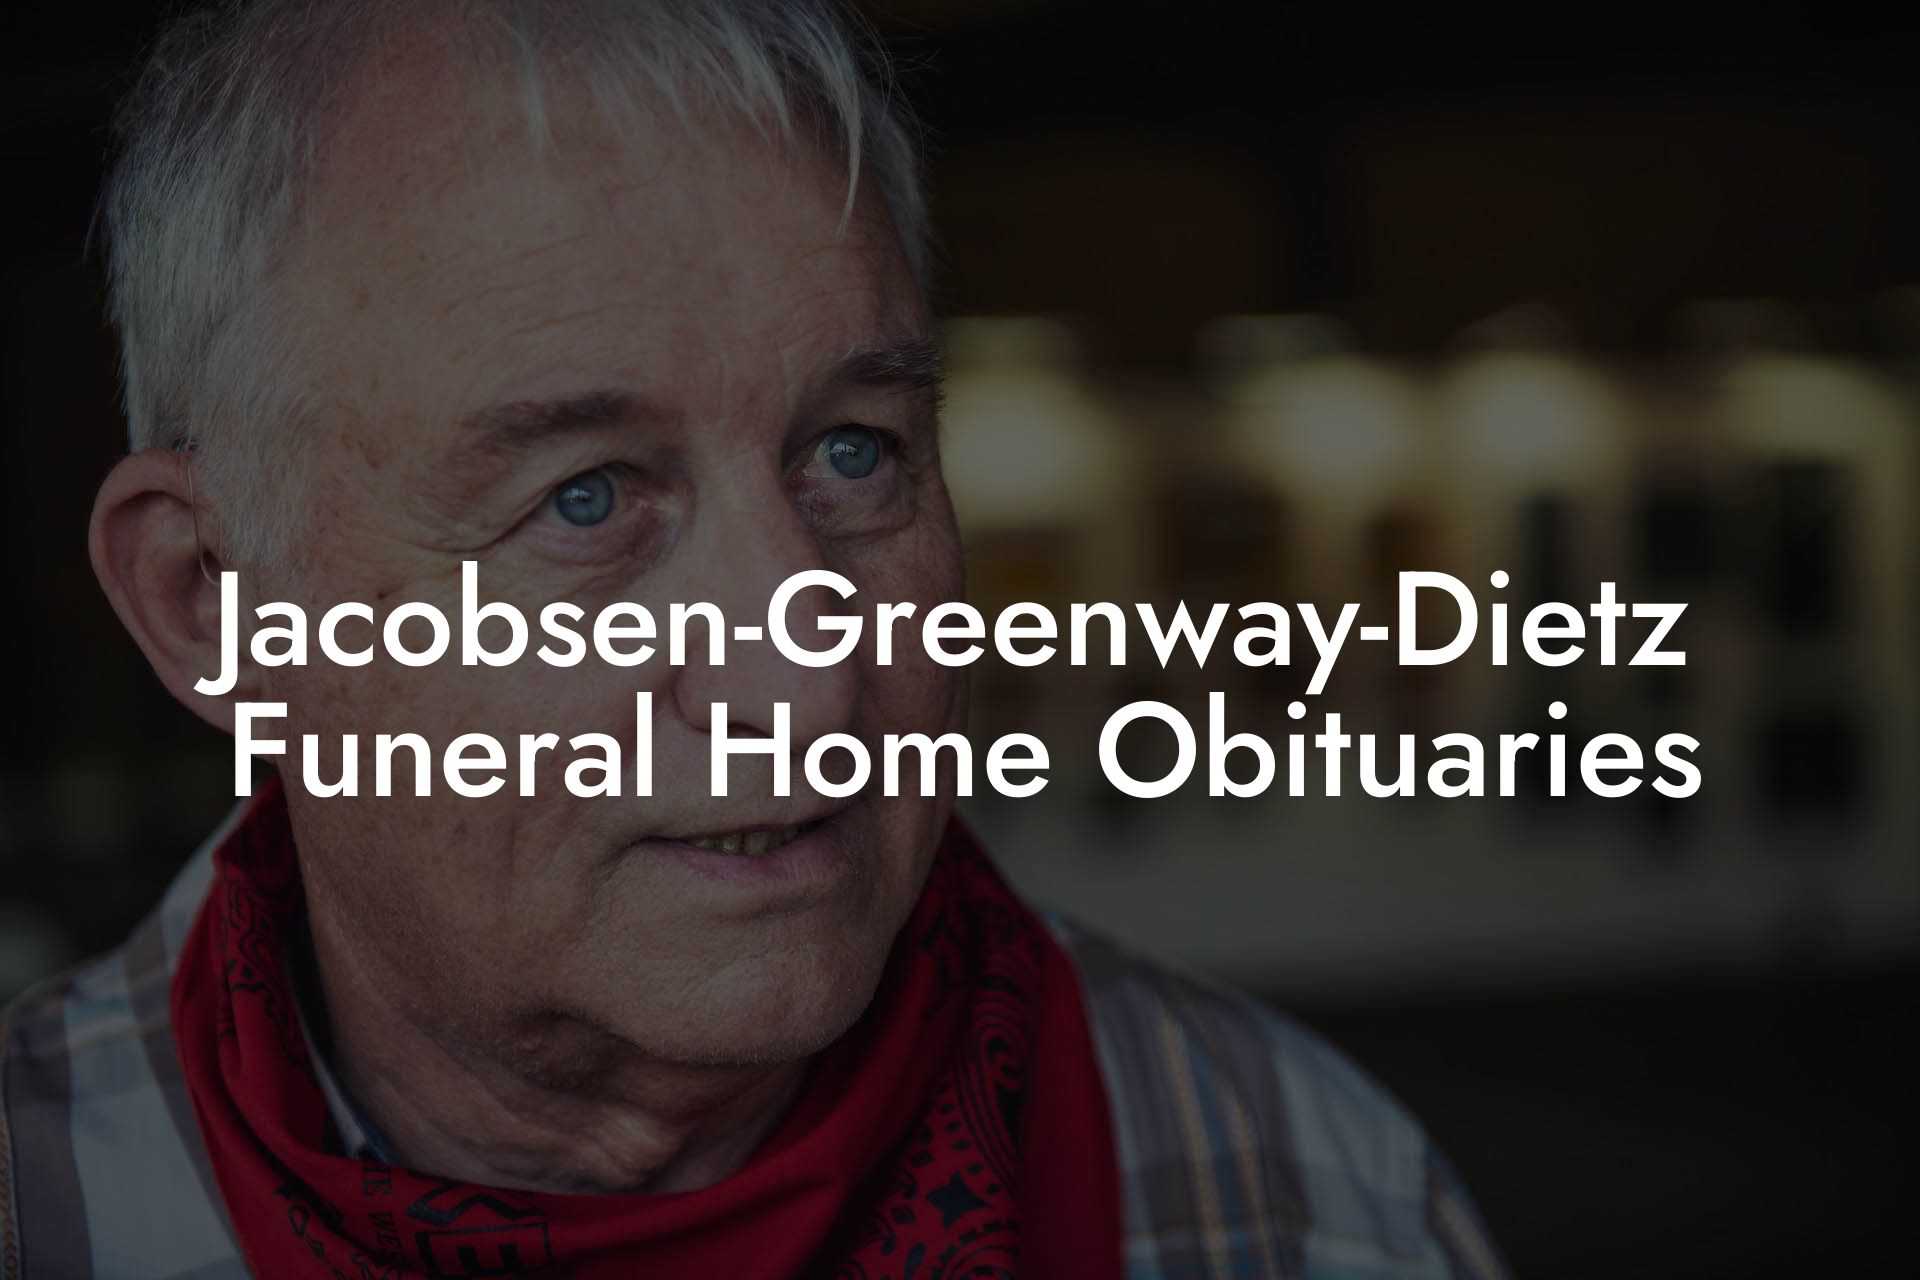 Jacobsen-Greenway-Dietz Funeral Home Obituaries